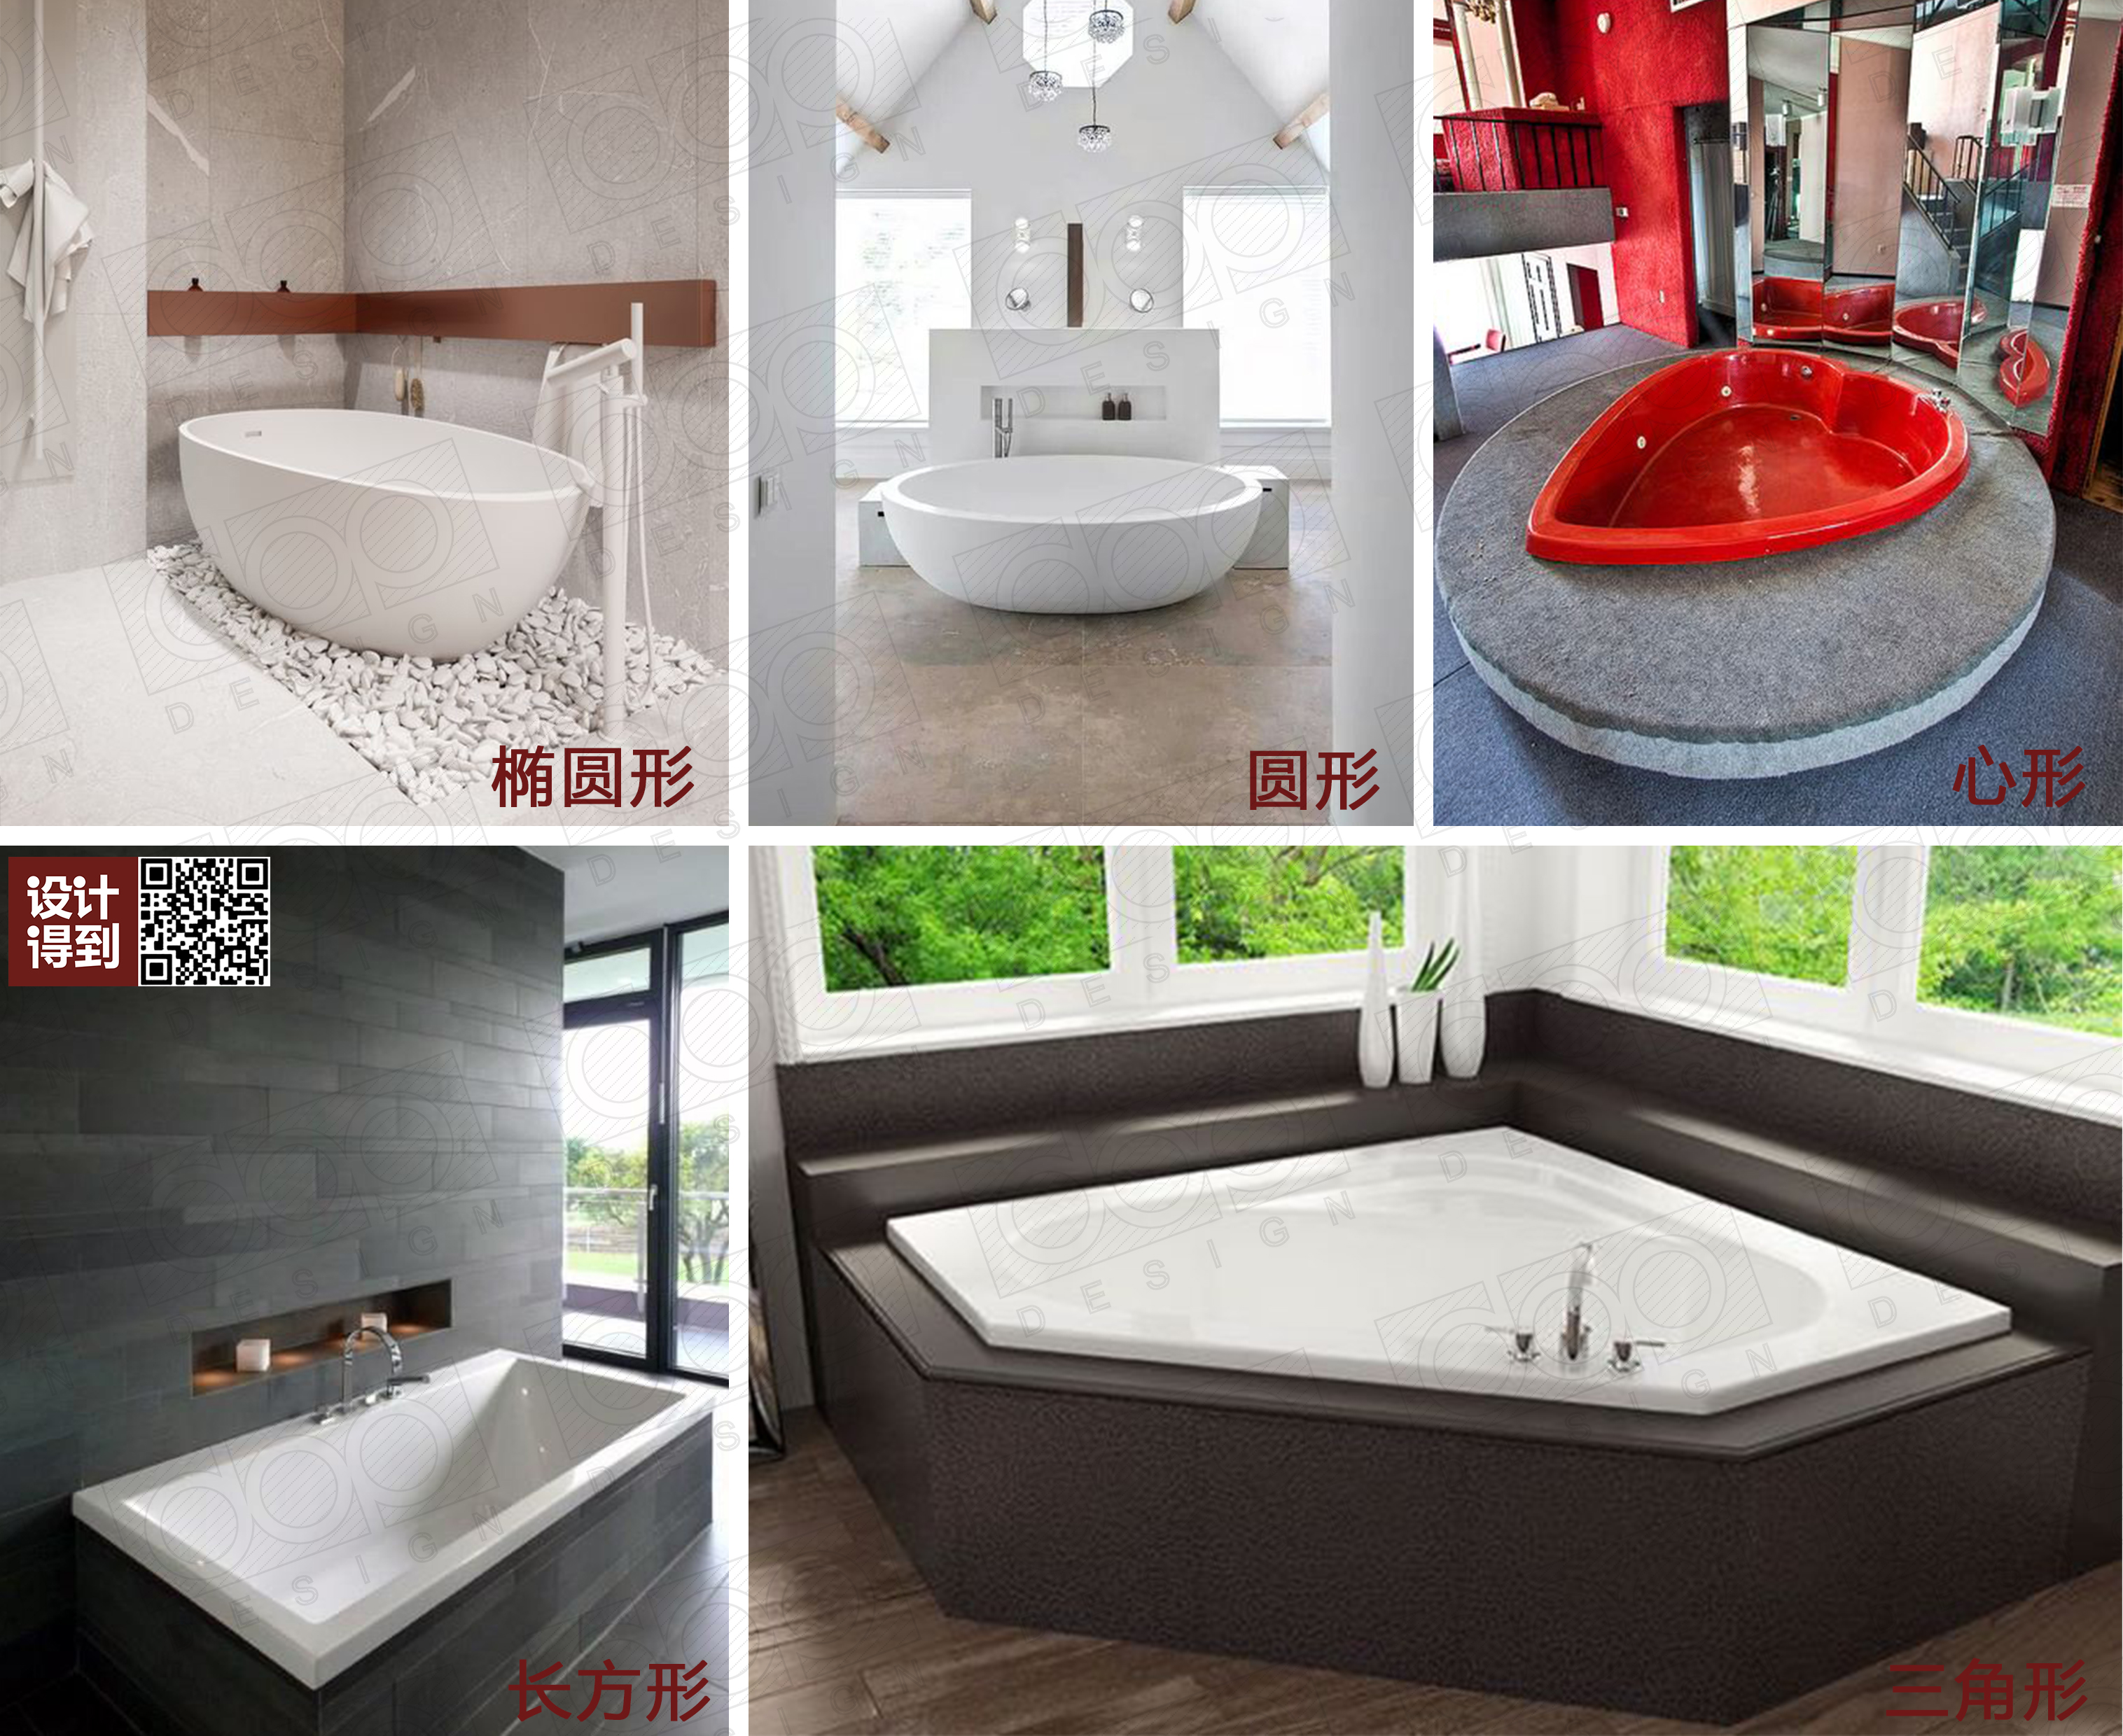 PJY1886HPWMNET 獨立式浴缸 – 獨立式浴缸 – 浴缸 | TOTO 台灣